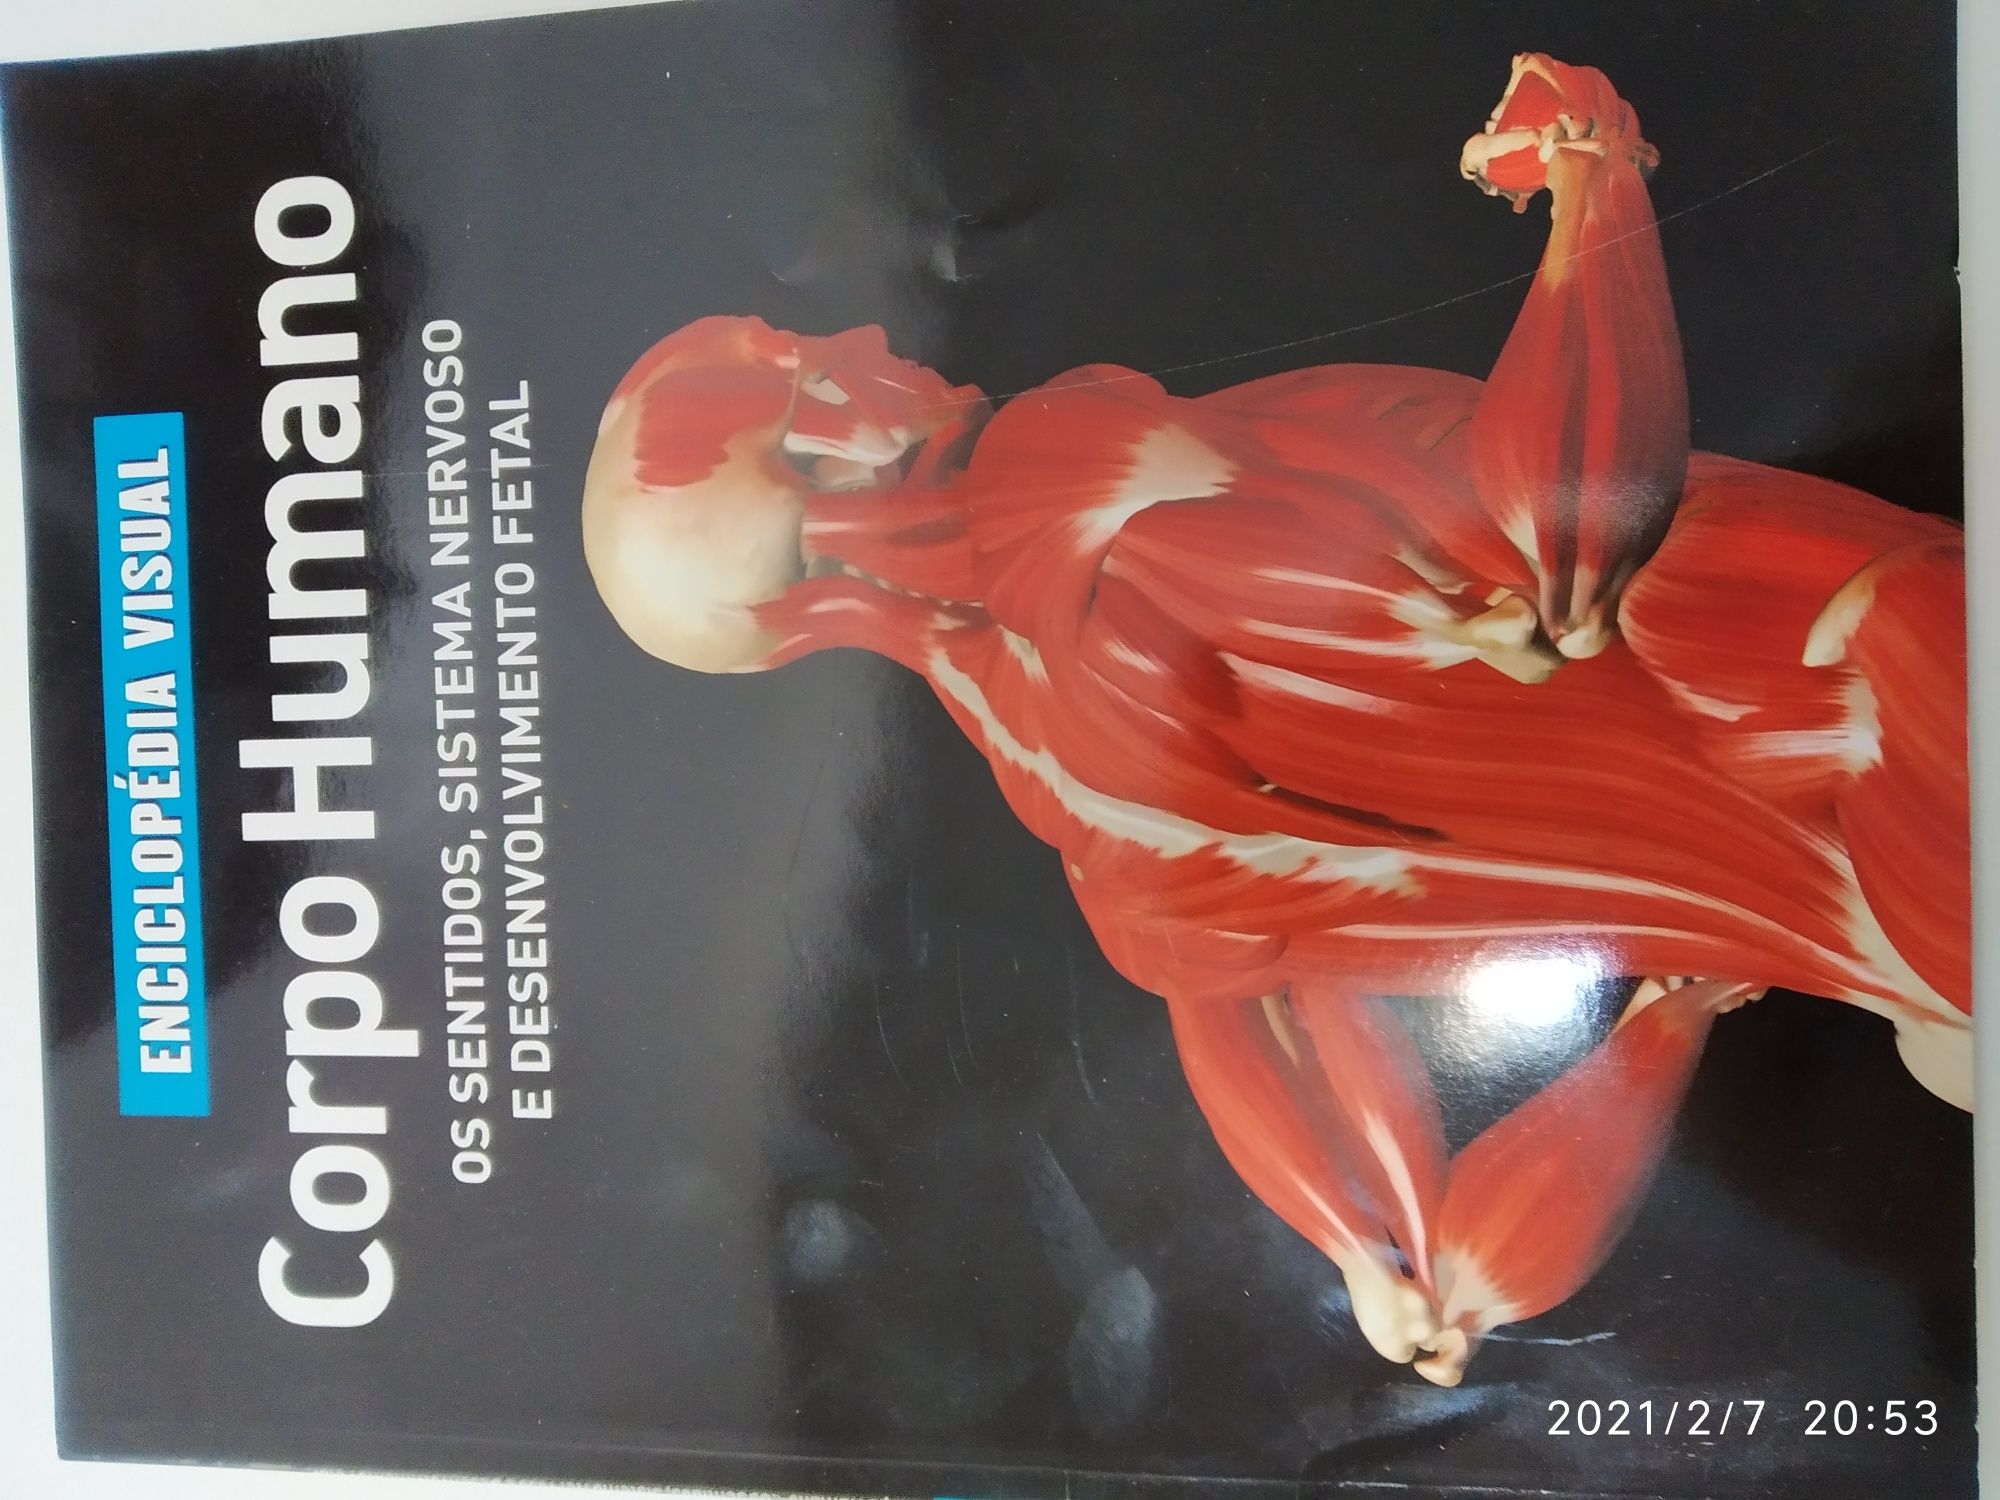 Livros "Corpo Humano" conjunto de 4